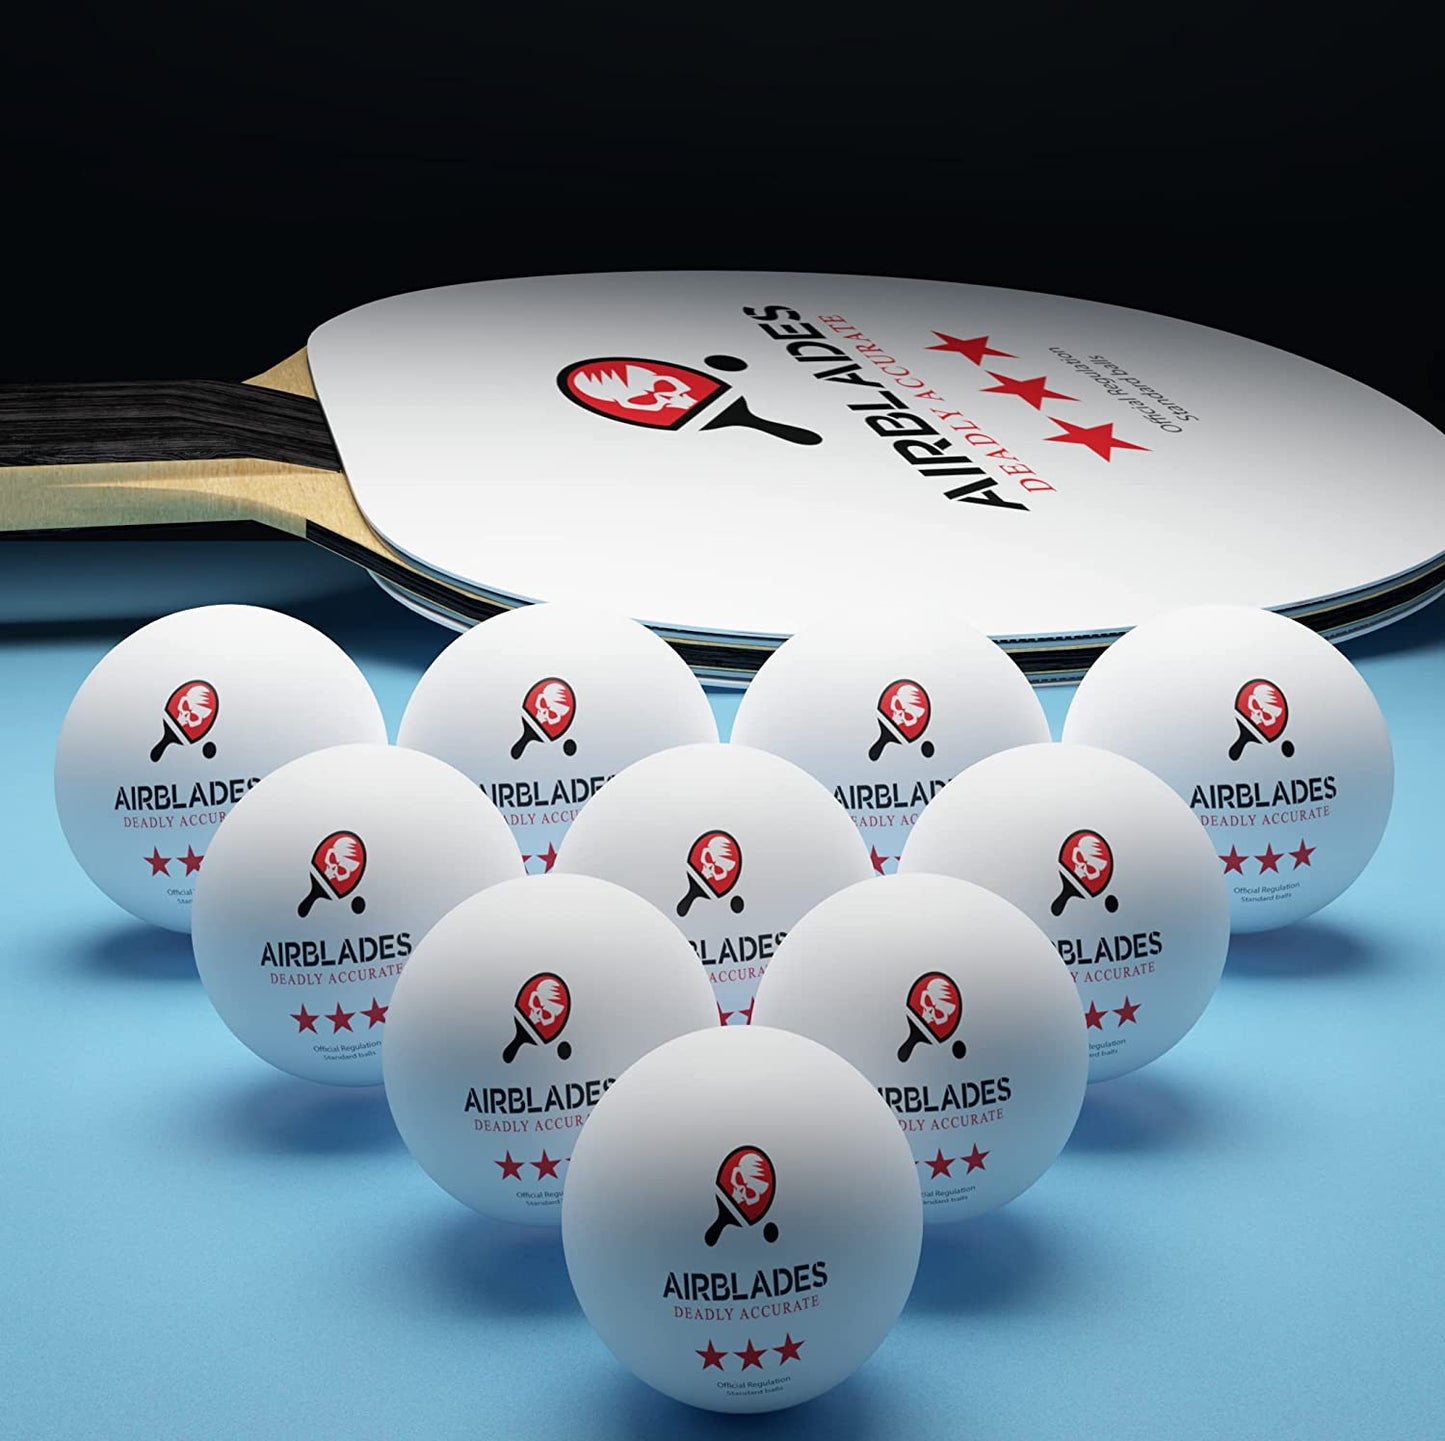 10-Pack of 3 Star Premium Ping-Pong Balls